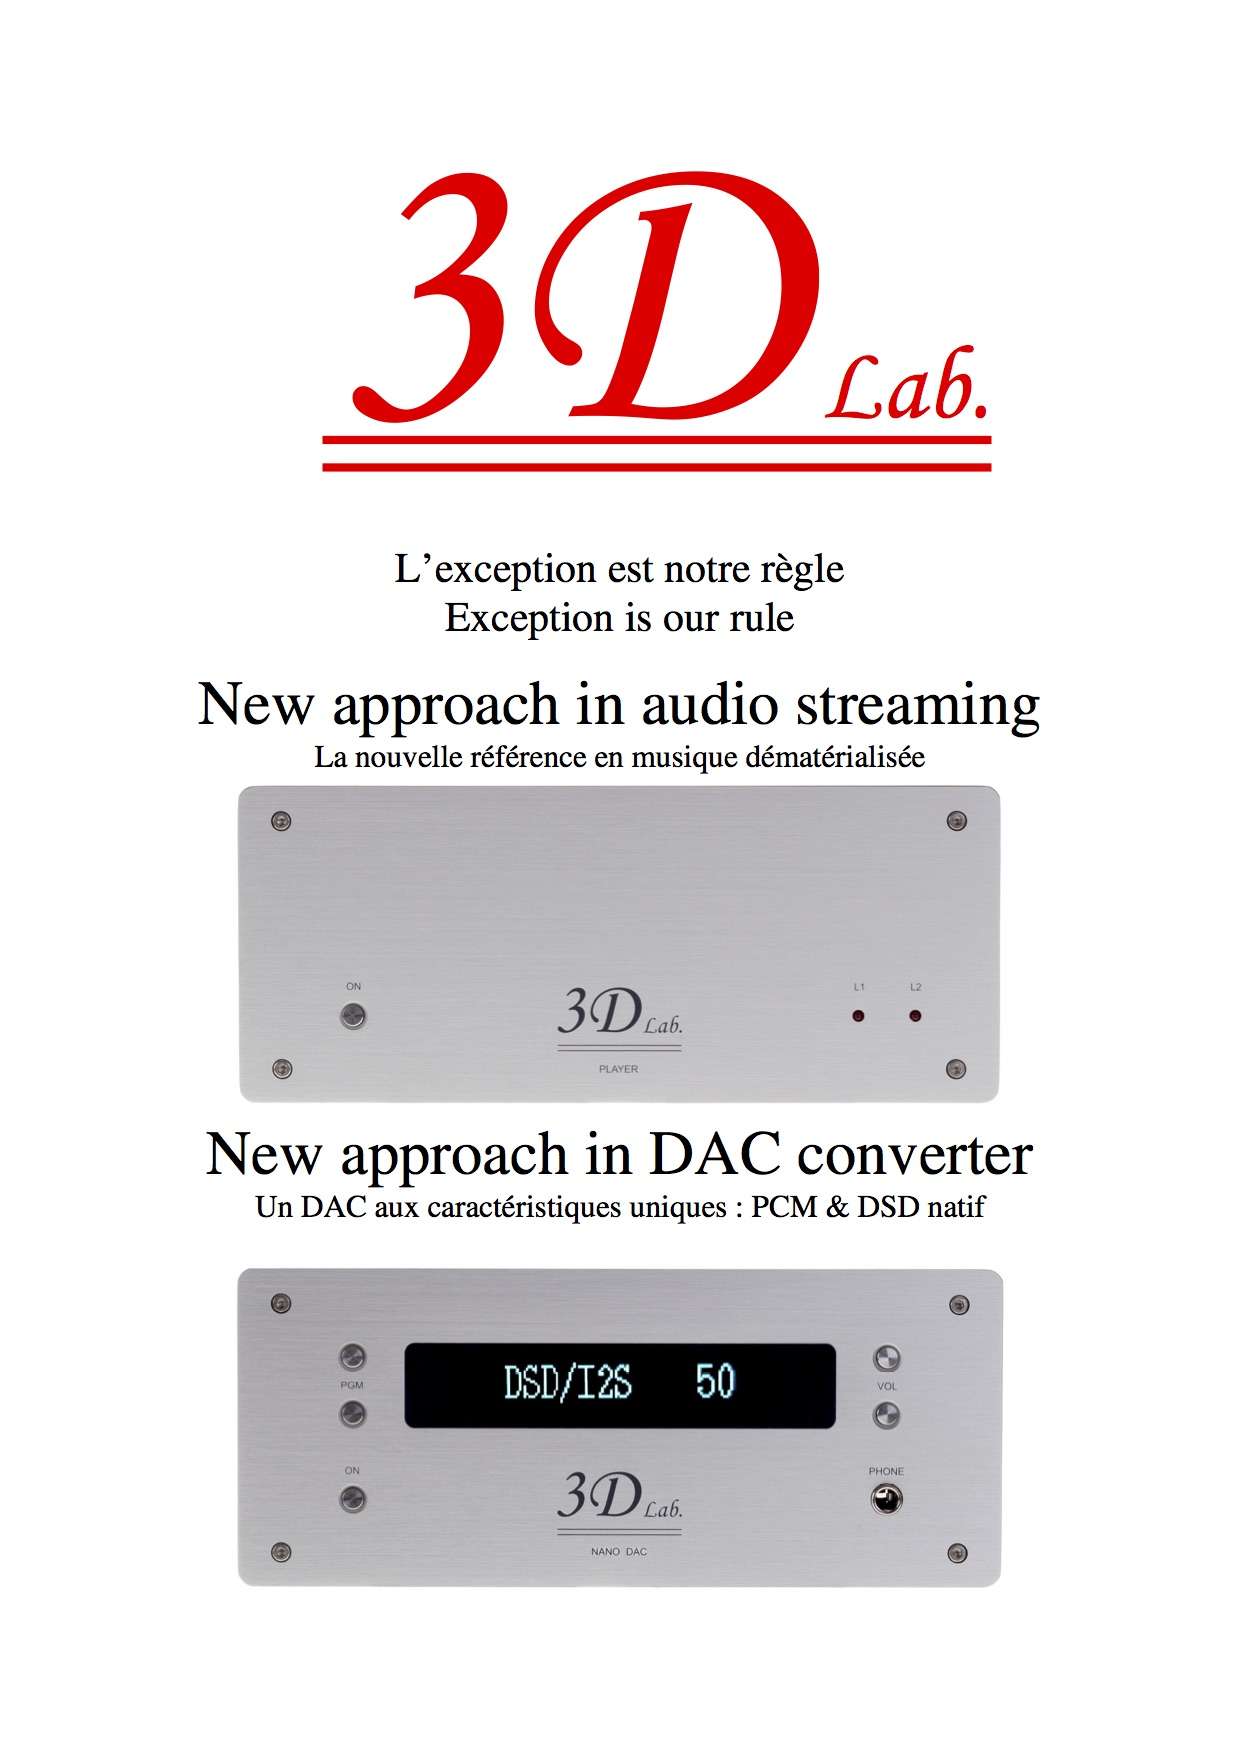 3D Lab Nano Amplifier Signature V5